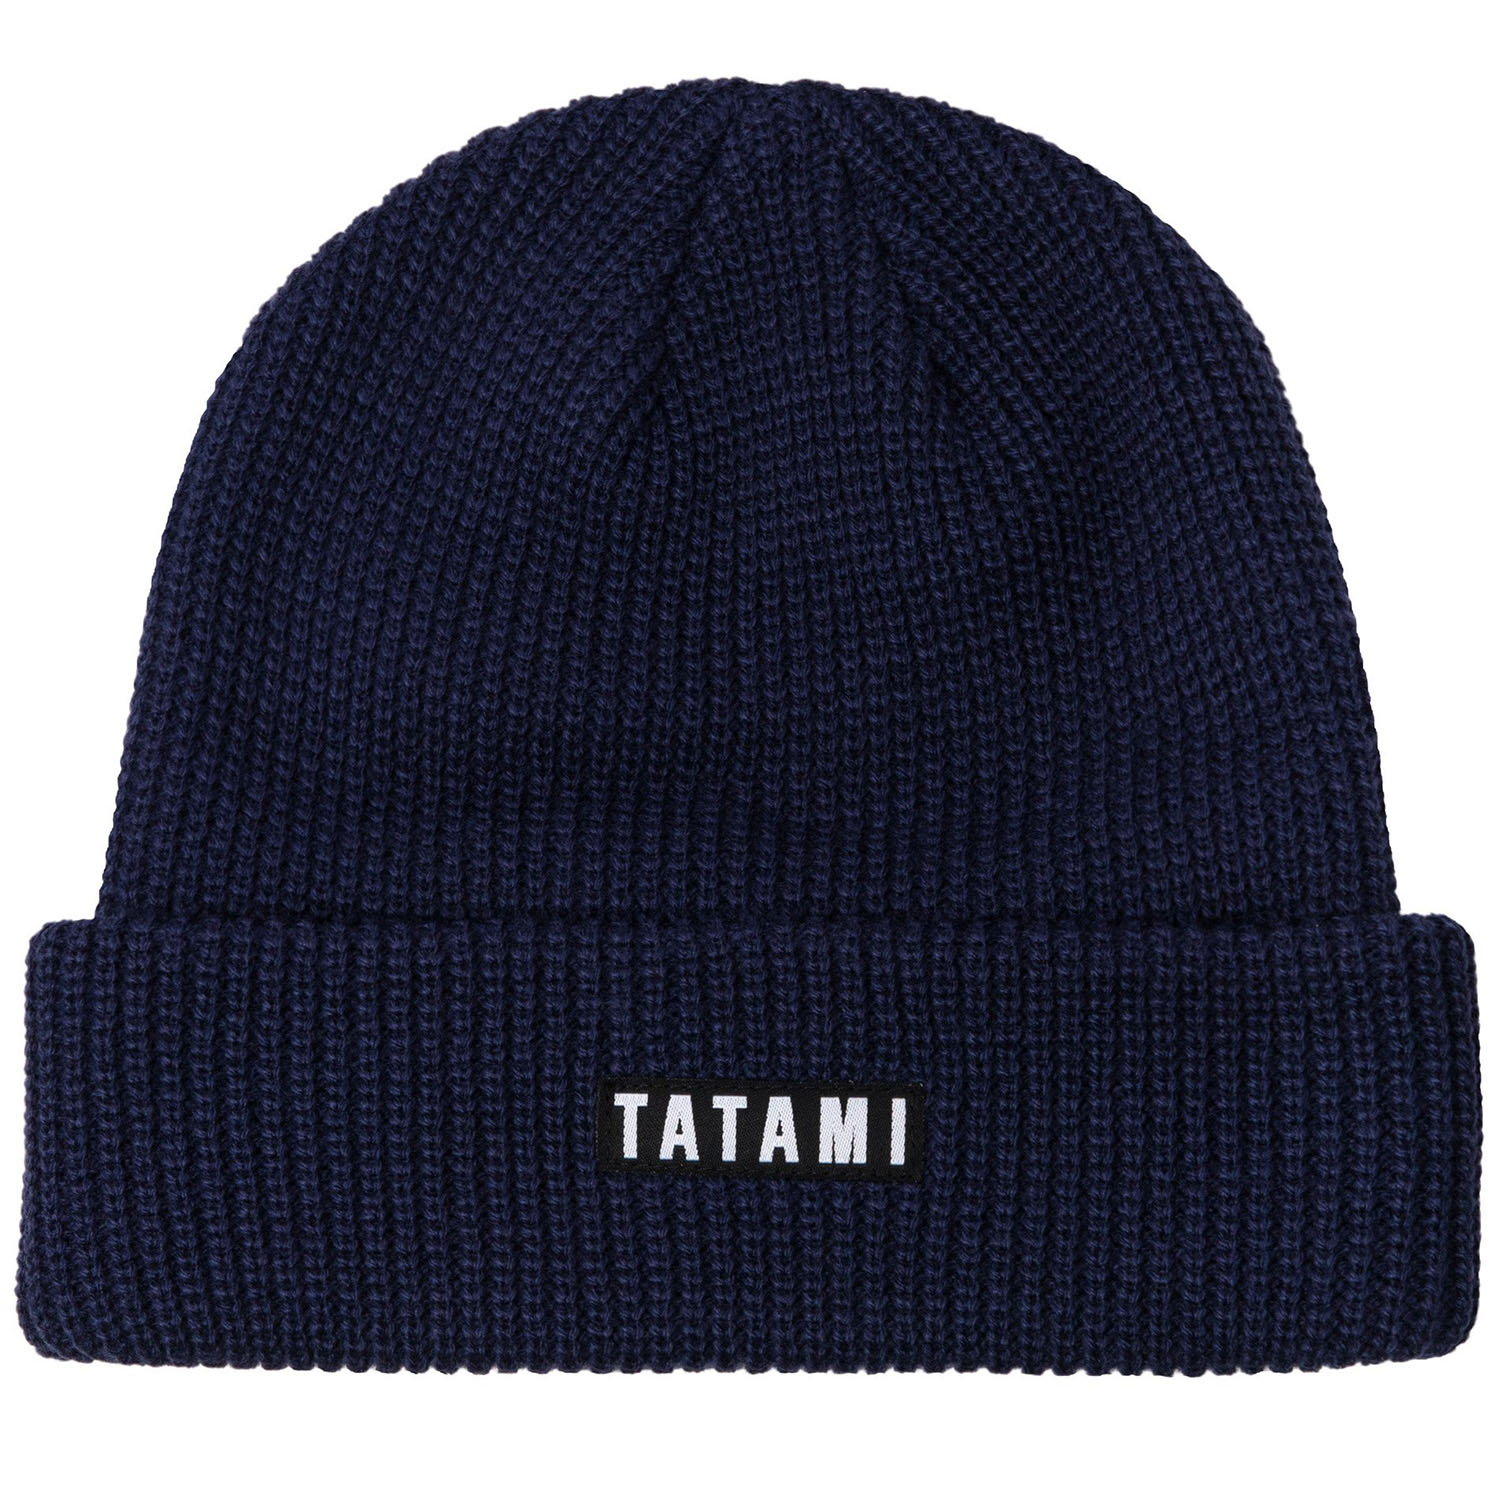 Tatami Beanie, Standard, navy